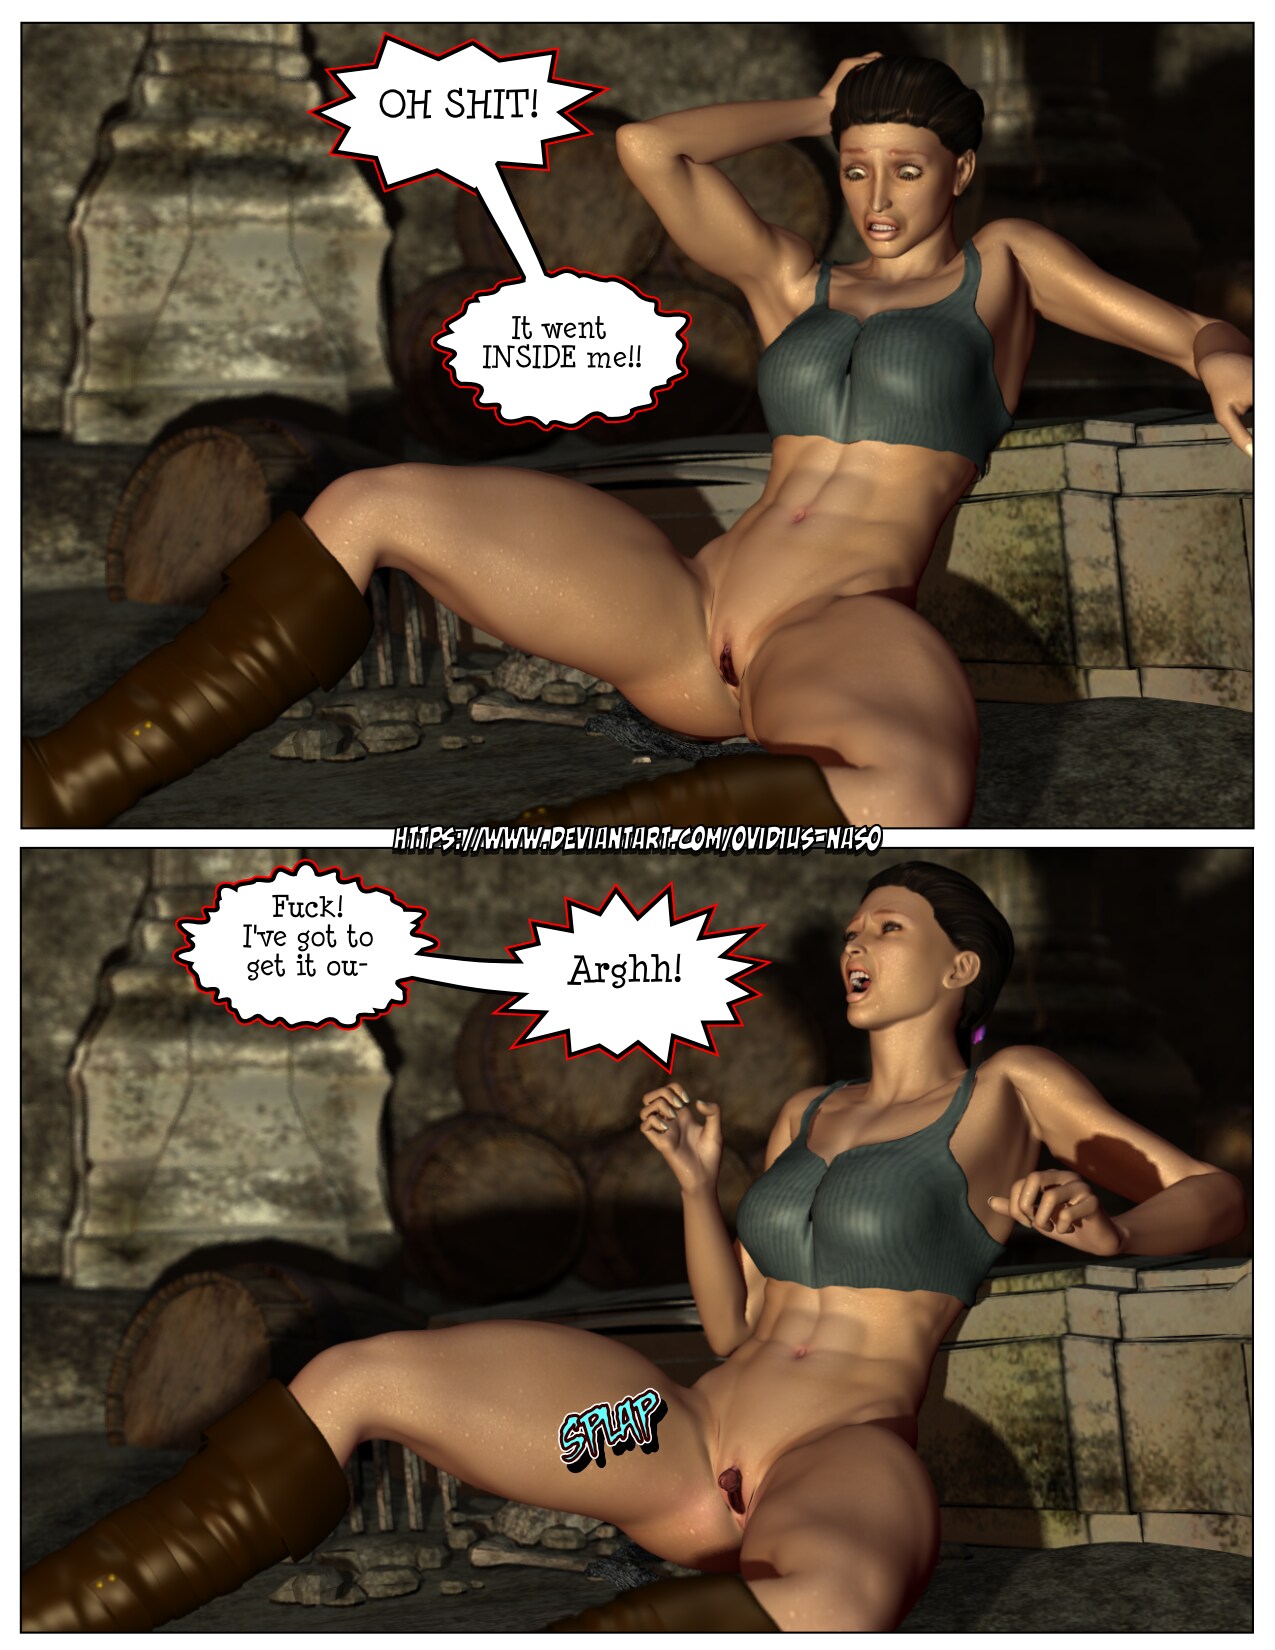 Lara Croft & The Phallic Tomb Reduxxx - Ovidius Naso.